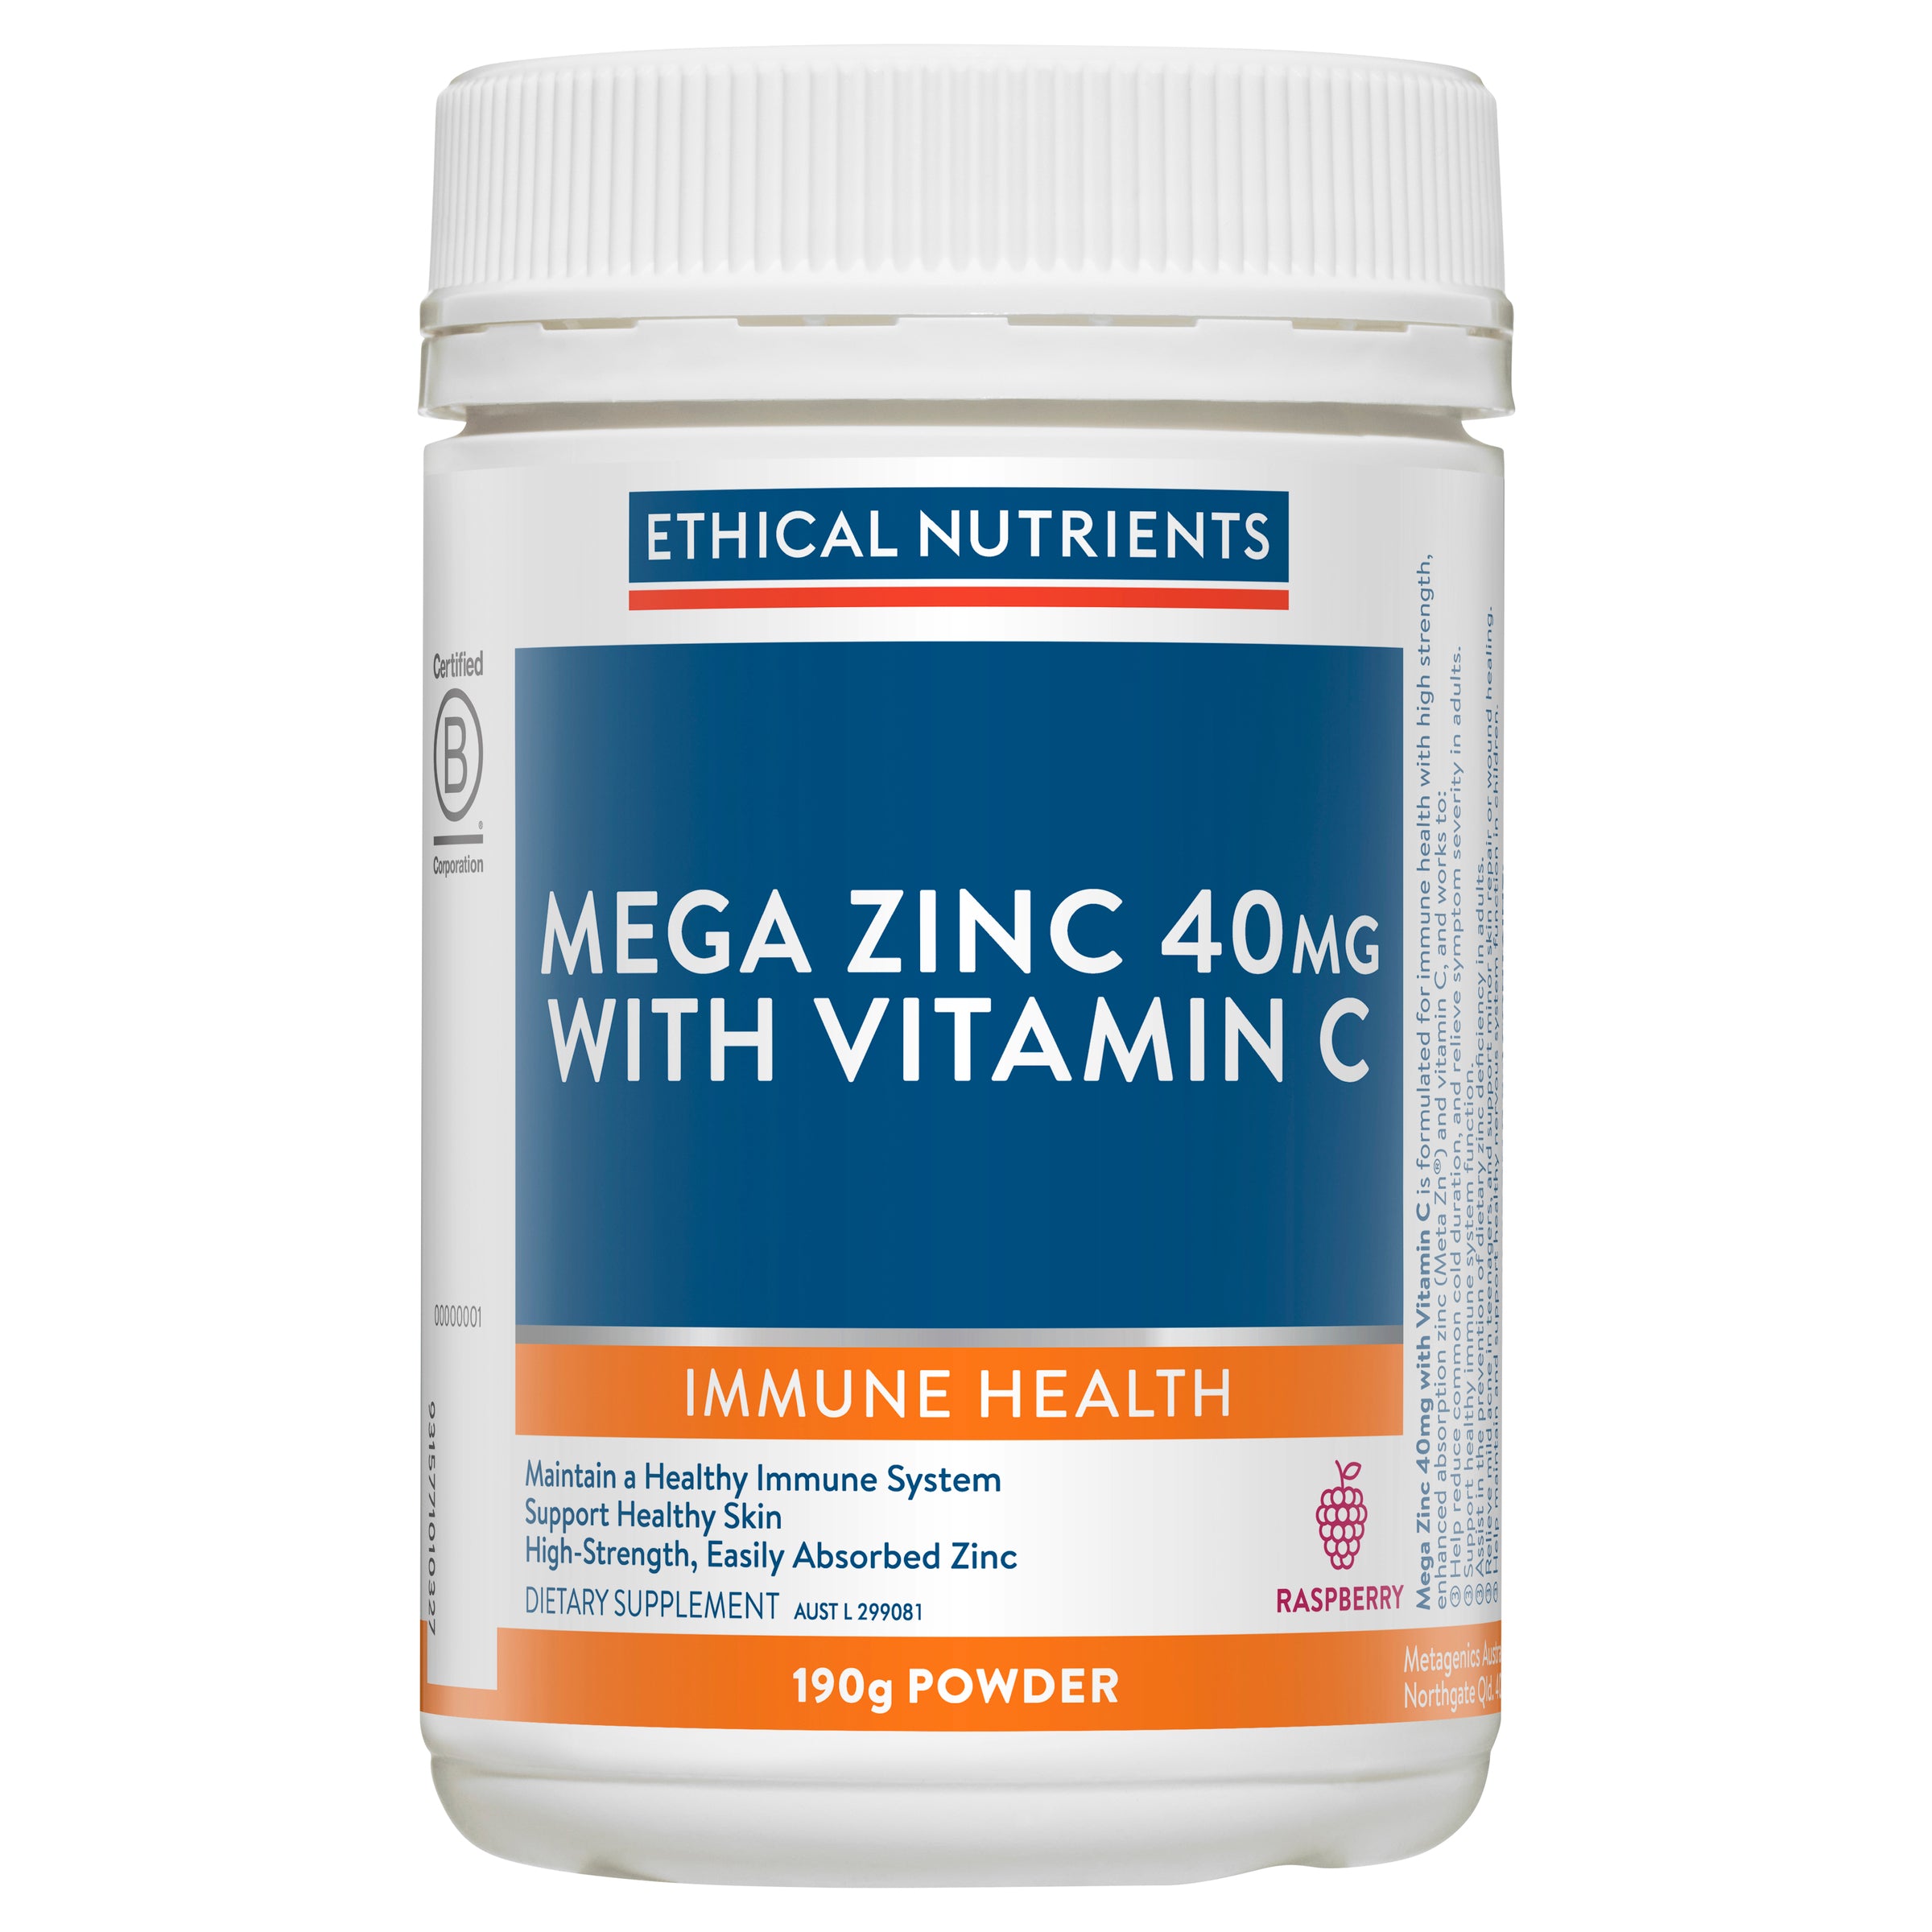 Ethical Nutrients Mega Zinc 40mg with Vitamin C Powder Raspberry 190g #size & flavour_raspberry 190g